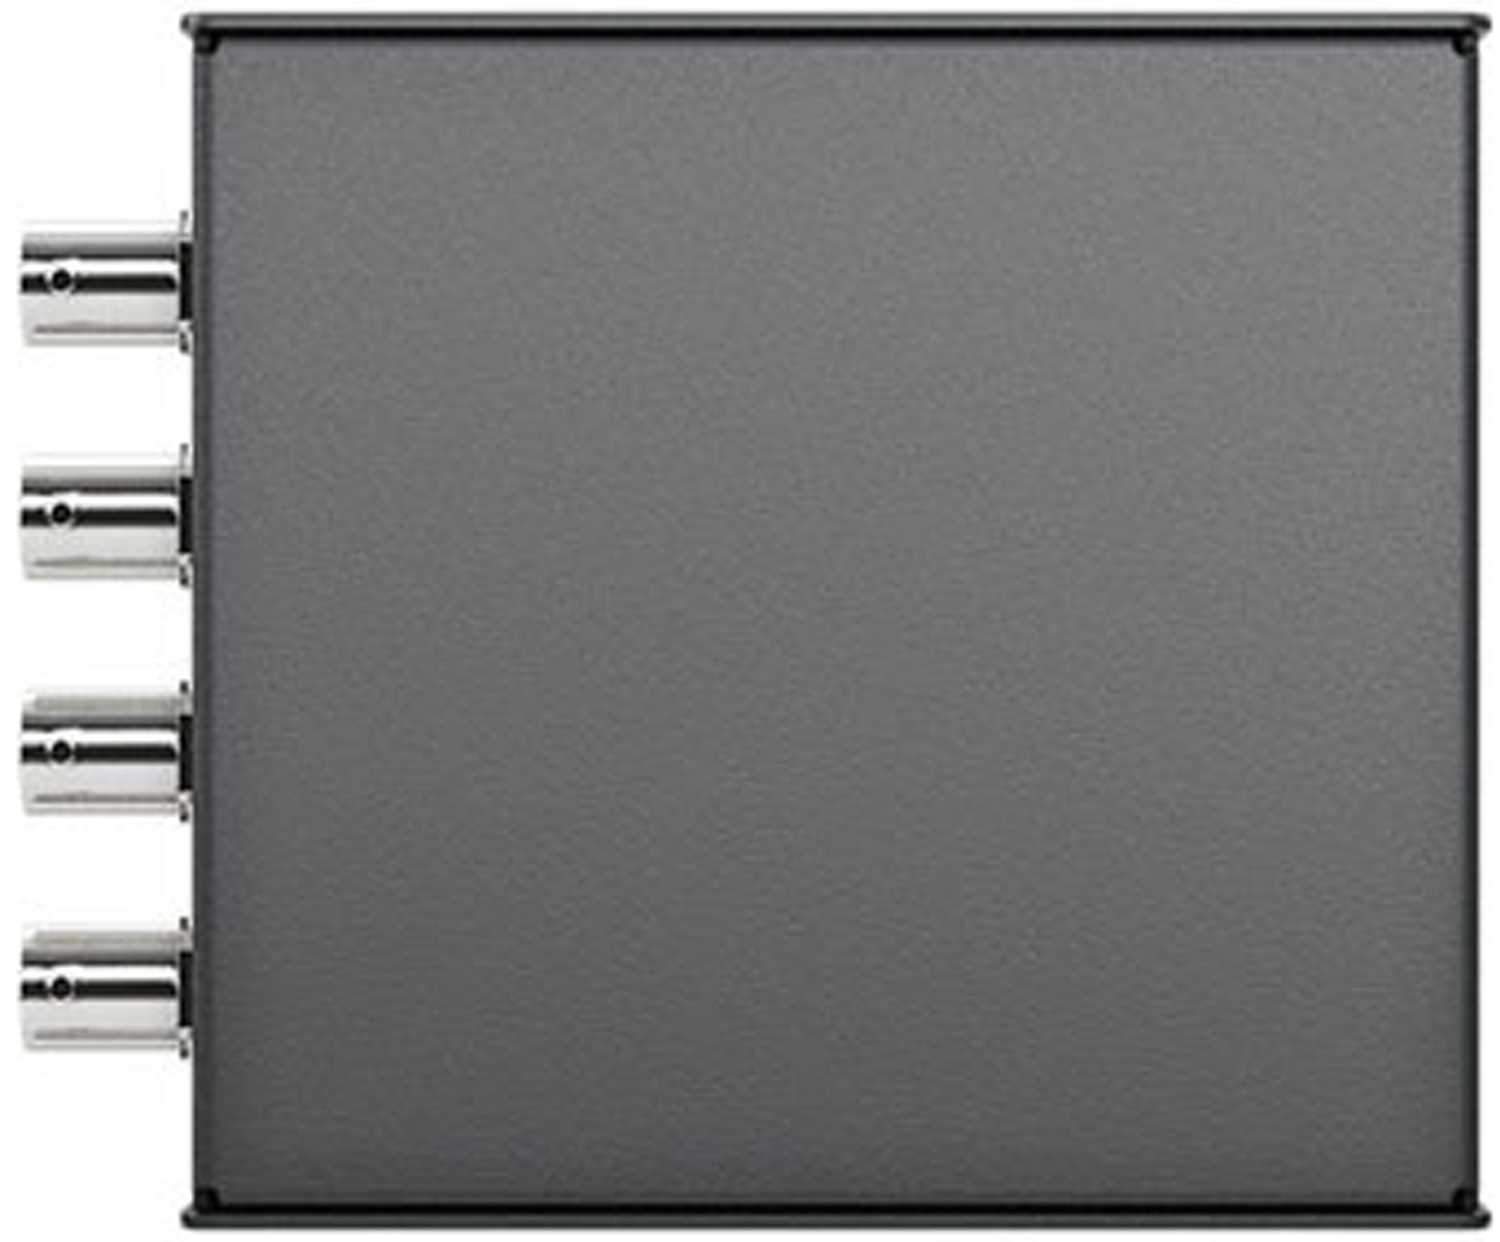 Blackmagic Design Mini Converter Quad SDI to HDMI - ProSound and Stage Lighting